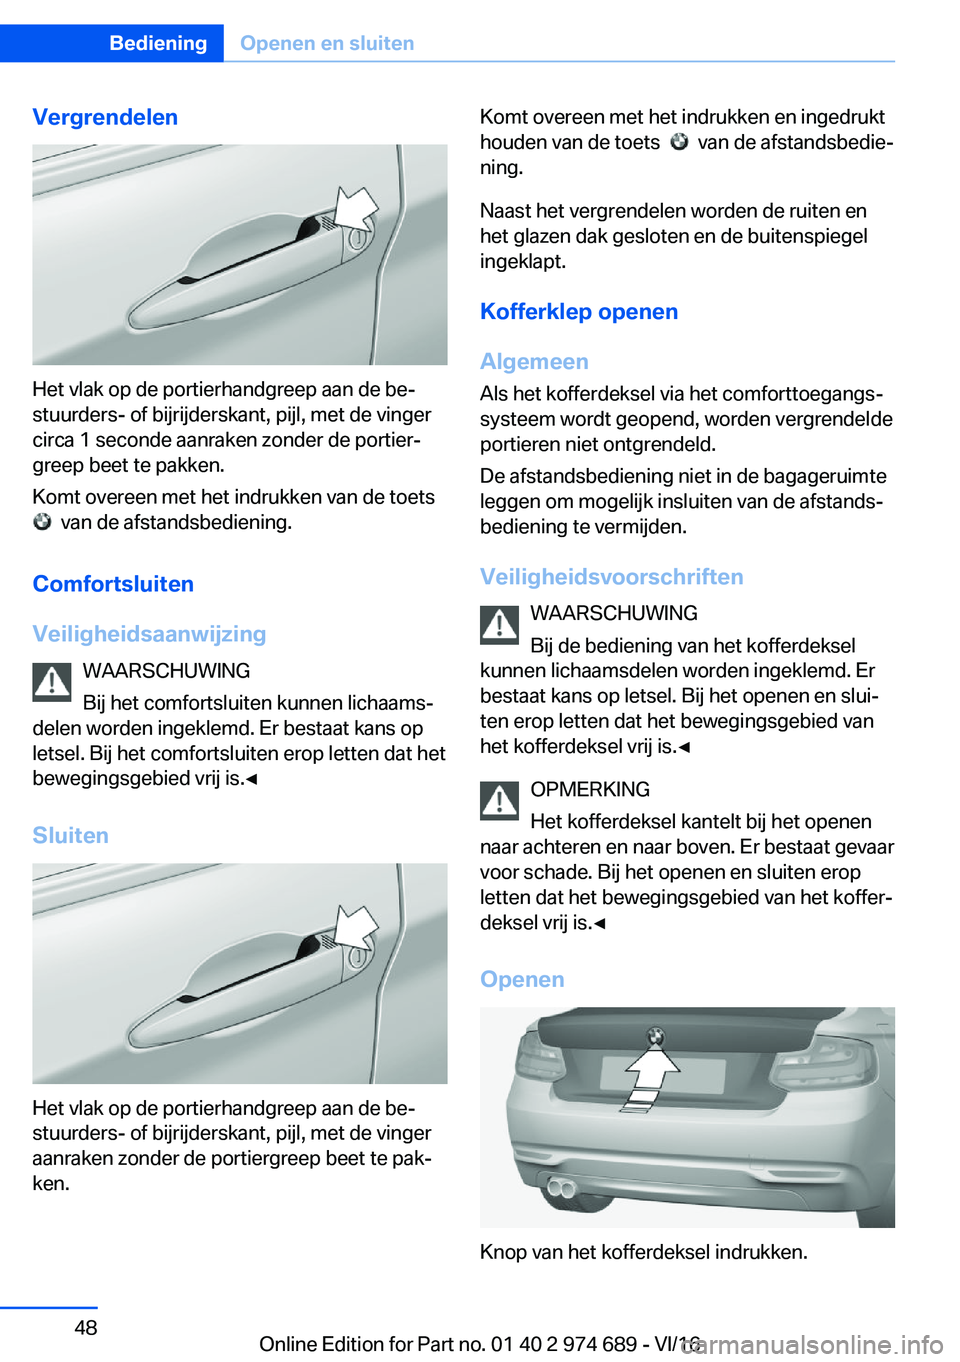 BMW M2 2017  Instructieboekjes (in Dutch) �V�e�r�g�r�e�n�d�e�l�e�n
�H�e�t� �v�l�a�k� �o�p� �d�e� �p�o�r�t�i�e�r�h�a�n�d�g�r�e�e�p� �a�a�n� �d�e� �b�ej�s�t�u�u�r�d�e�r�s�-� �o�f� �b�i�j�r�i�j�d�e�r�s�k�a�n�t�,� �p�i�j�l�,� �m�e�t� �d�e� �v�i�